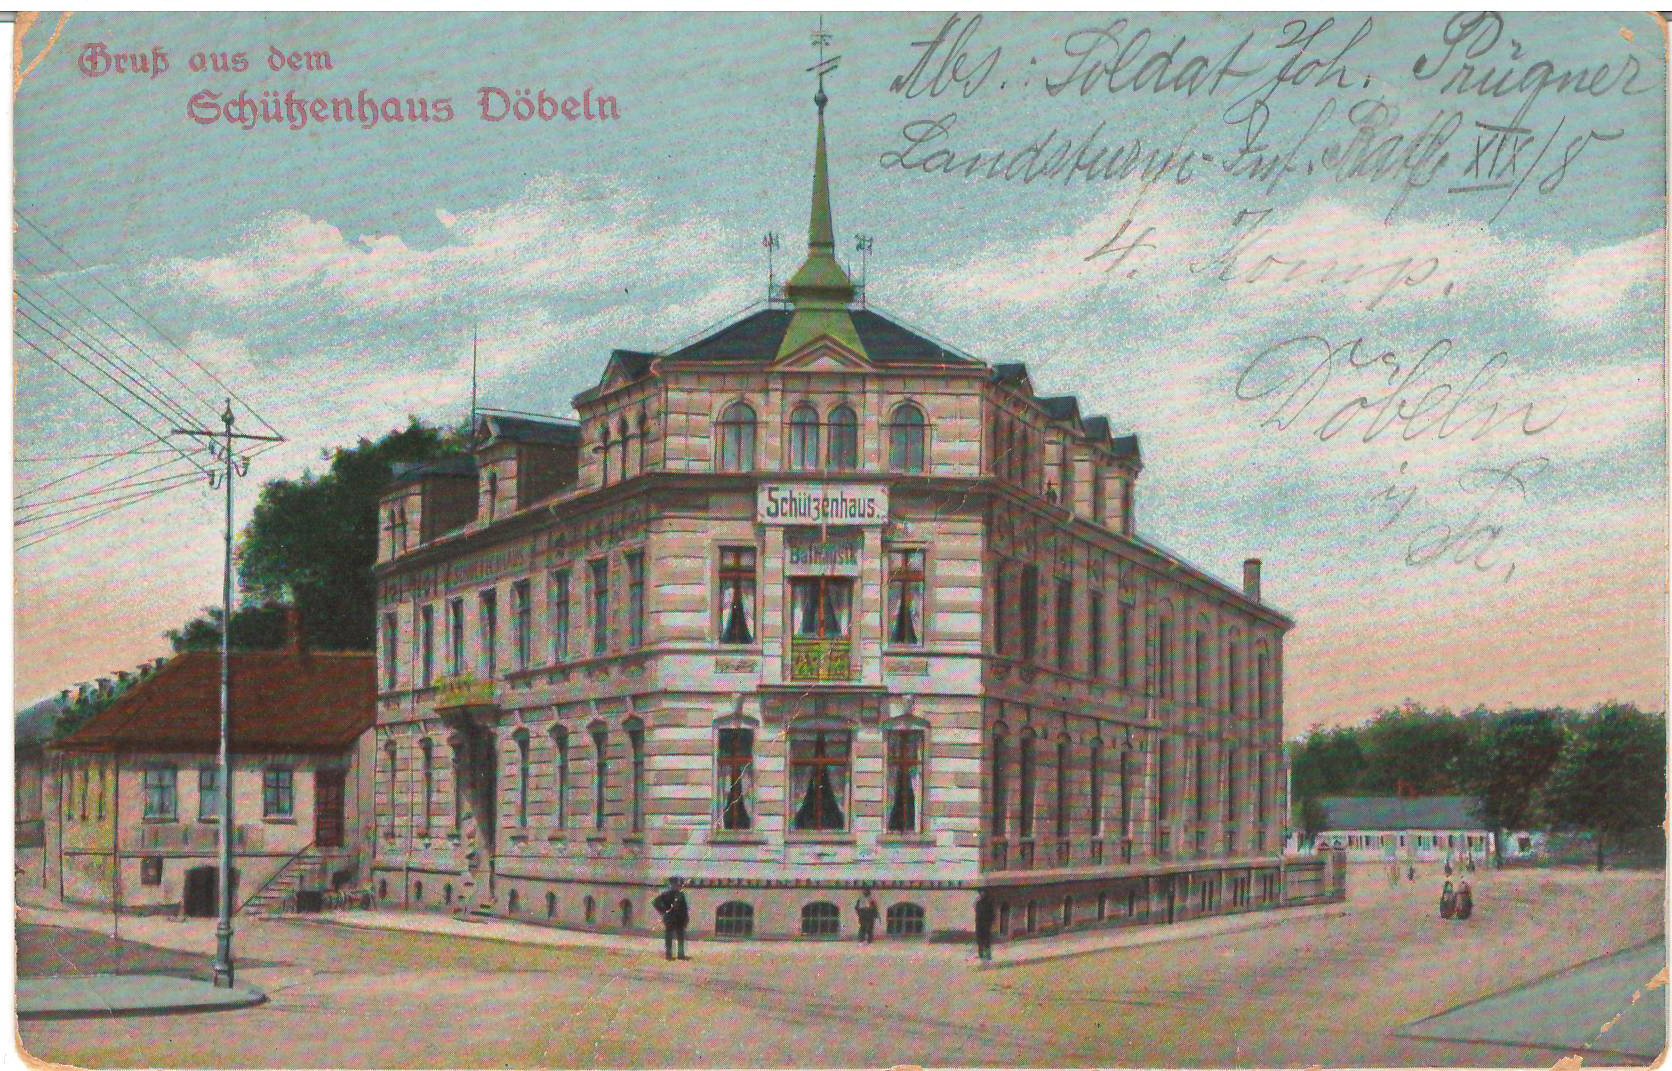 Ansichtspostkarte Döbeln: Gruß aus dem Schützenhaus Döbeln (Stadtmuseum / Kleine Galerie Döbeln CC BY-NC-SA)